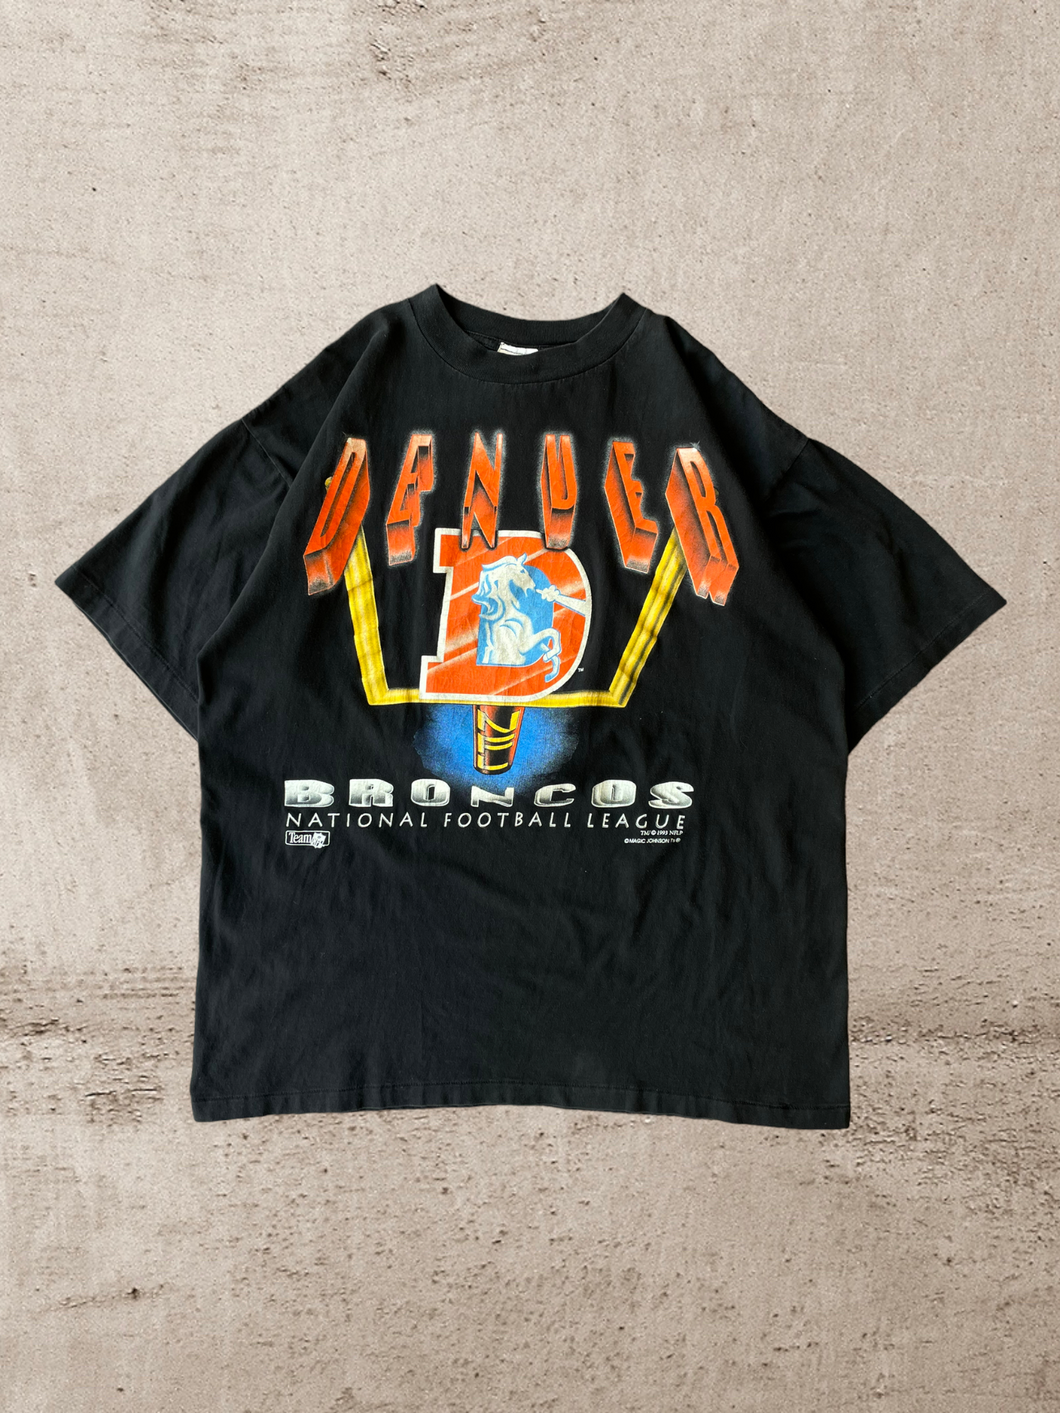 1993 Denver Broncos Magic Johnson Graphic T-Shirt - Large